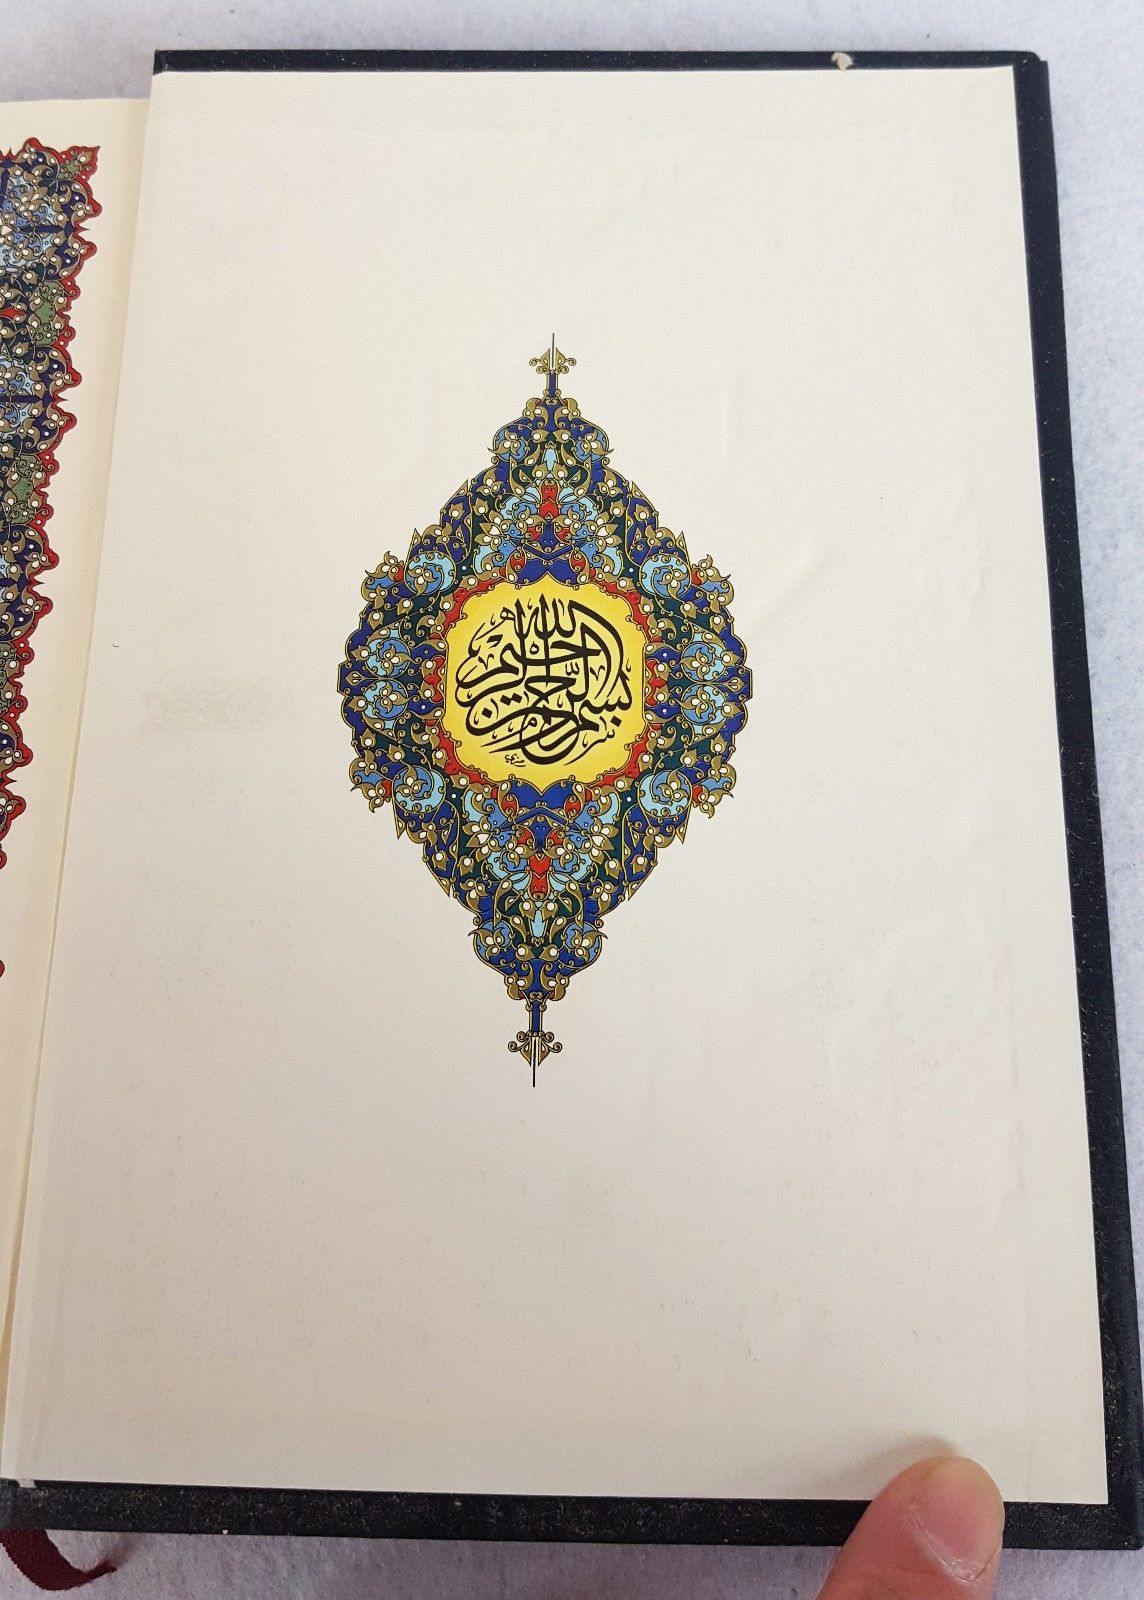 Arabian Star Holy Quran Uthmani Script 20*14cm Book - Arabic Text - Islamic Shop